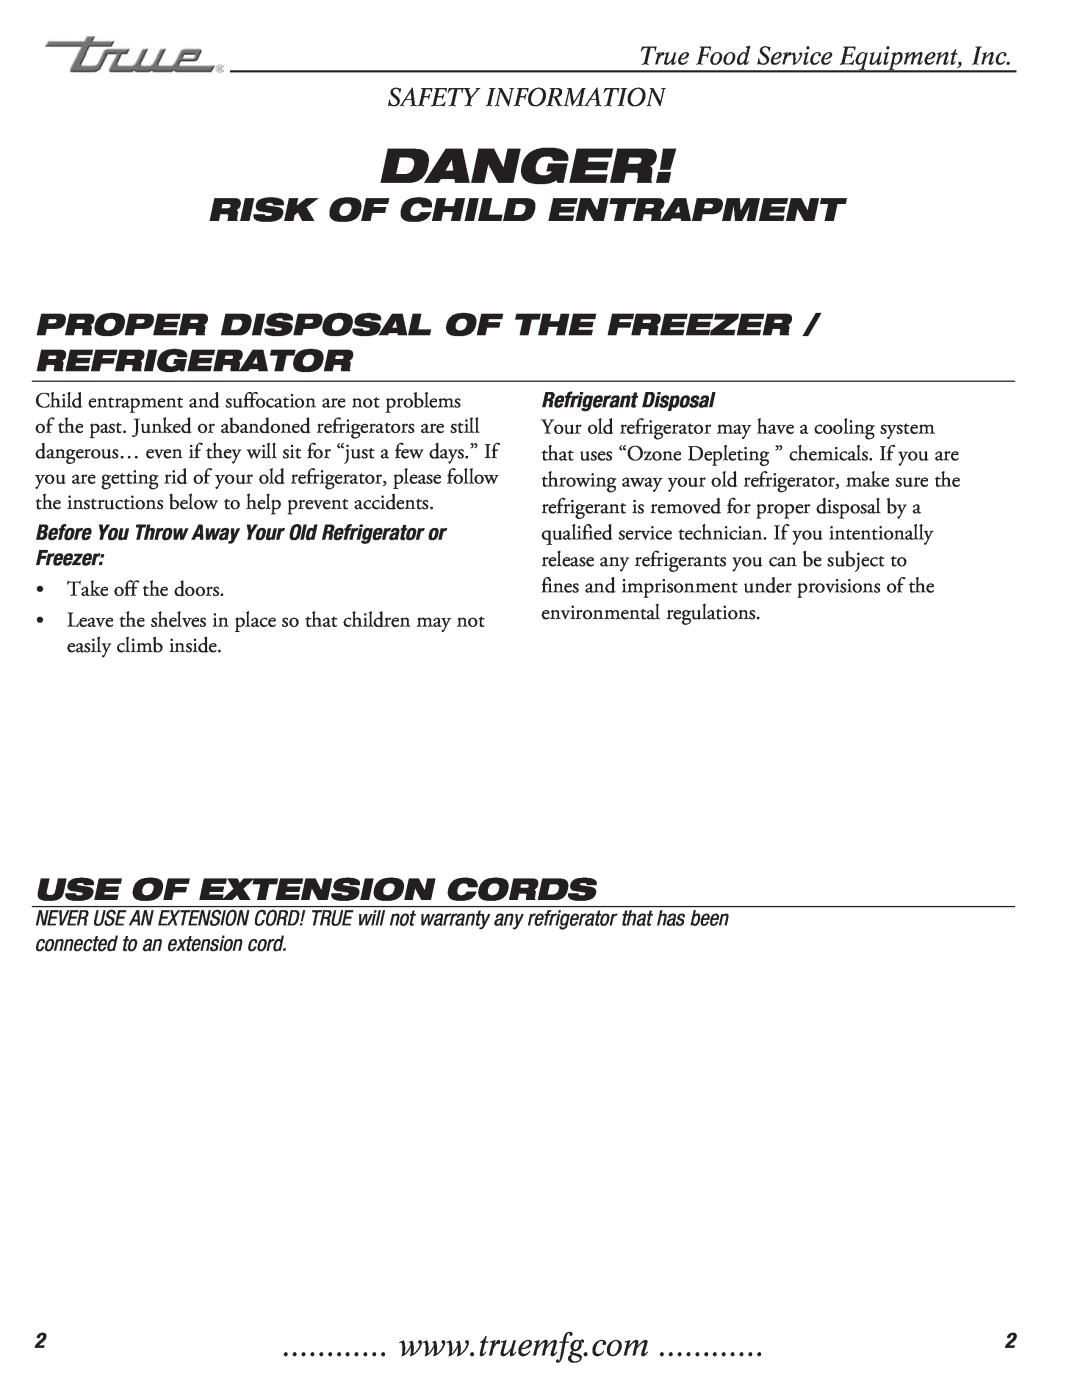 True Manufacturing Company T-23DT Risk Of Child Entrapment, Proper Disposal Of The Freezer / Refrigerator, Danger 